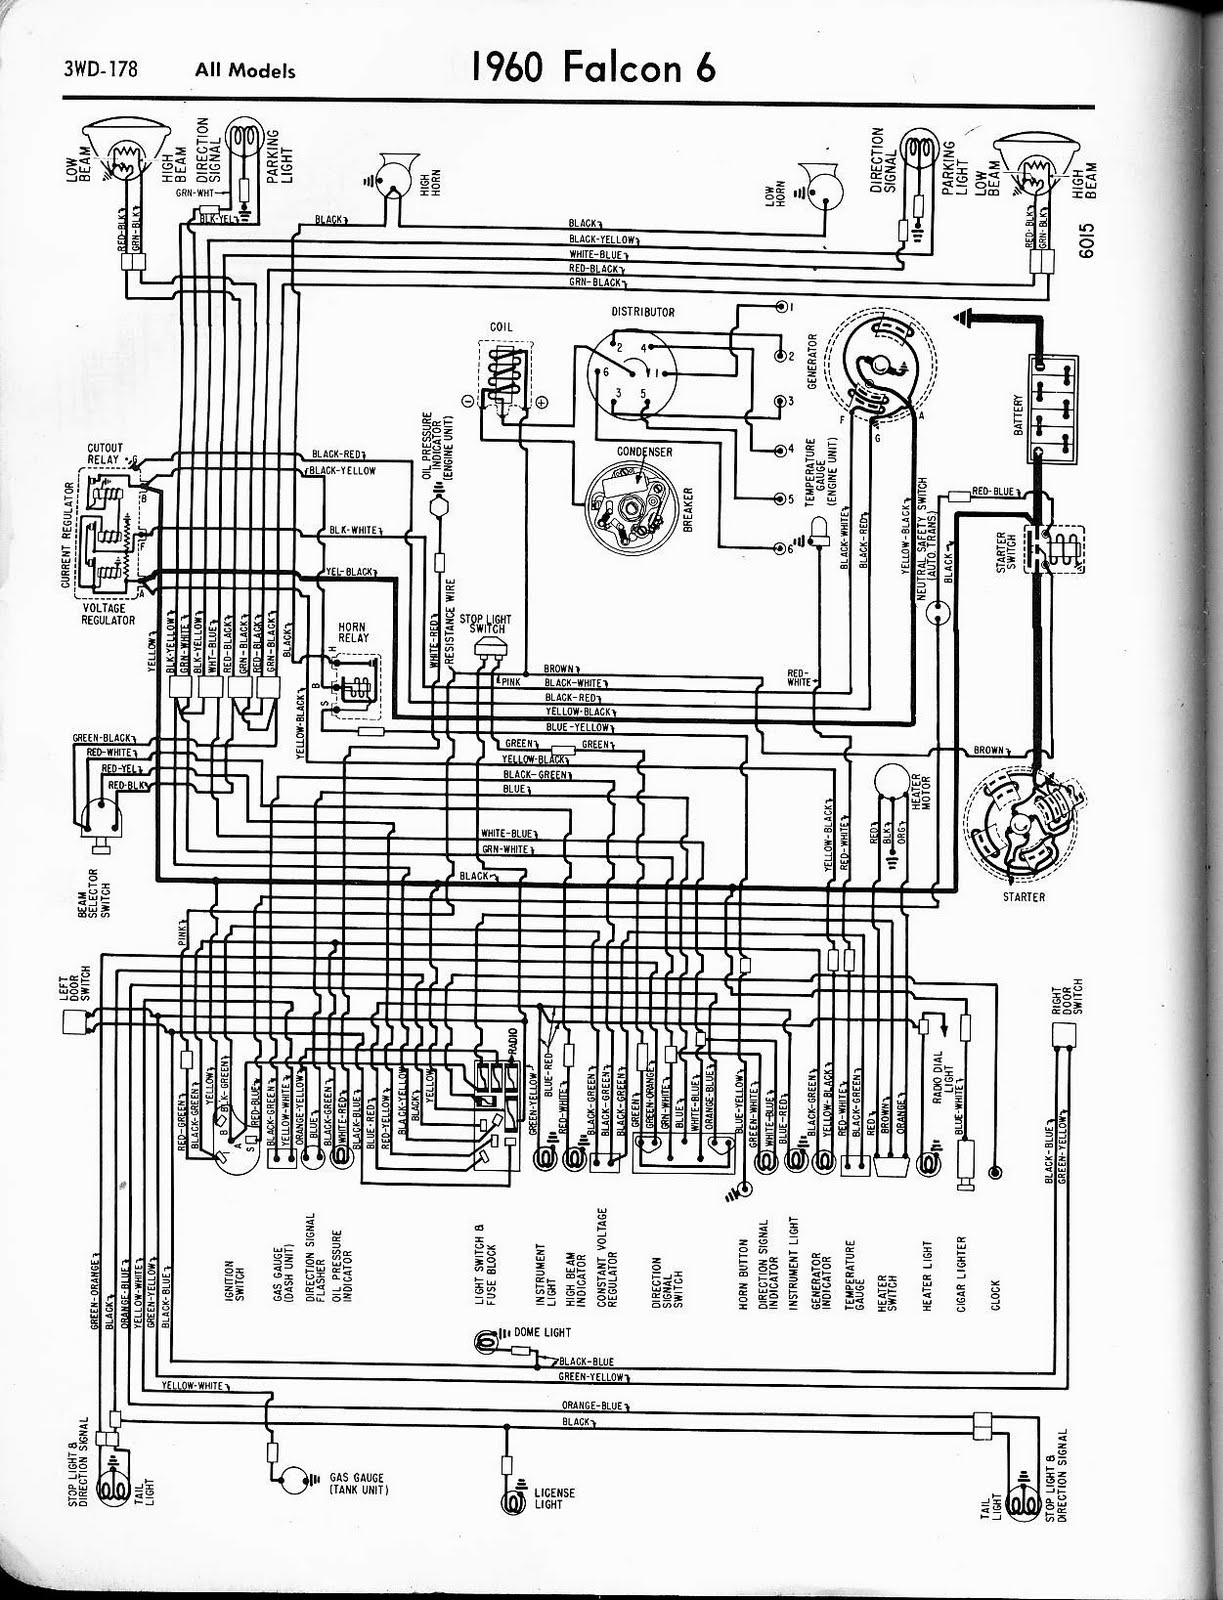 Free Auto Wiring Diagram: 1960 Ford Falcon V6 Wiring